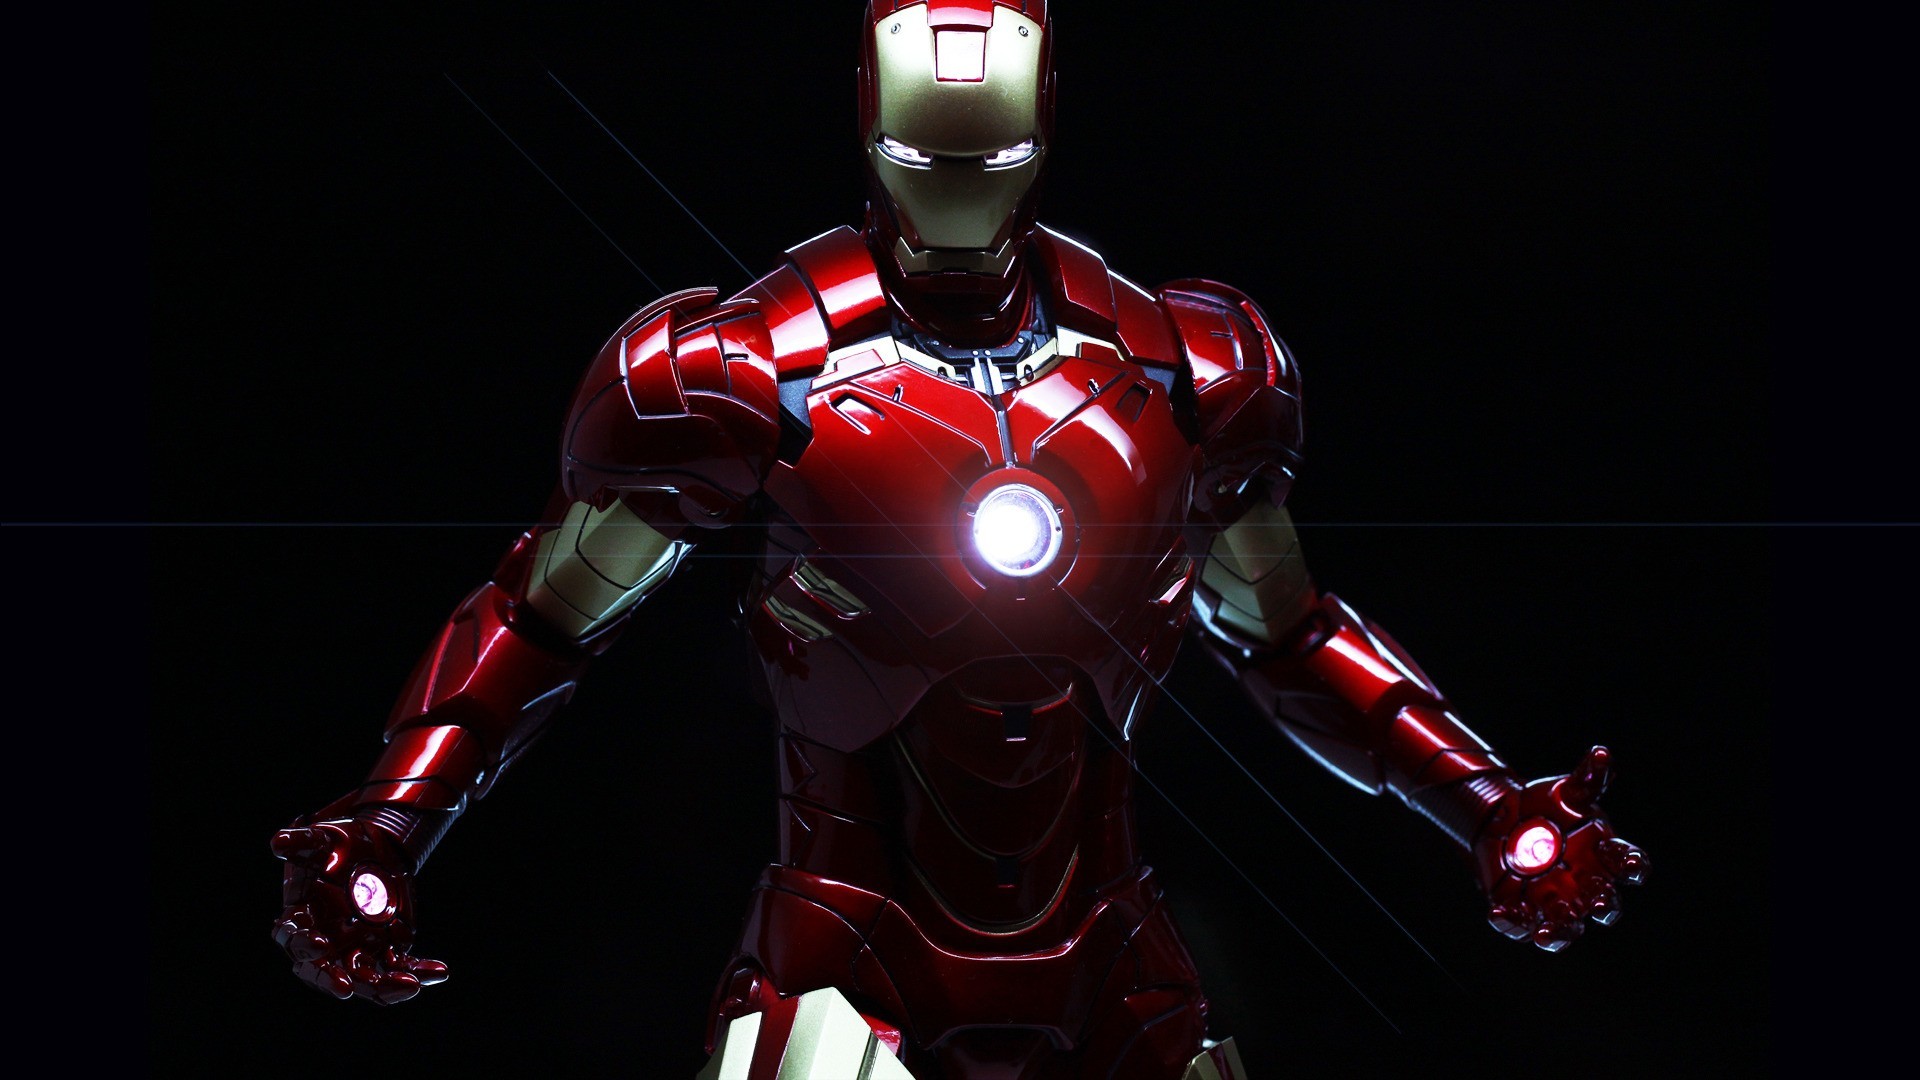 General 1920x1080 Iron Man movies Tony Stark Iron Man 2 superhero Marvel Comics